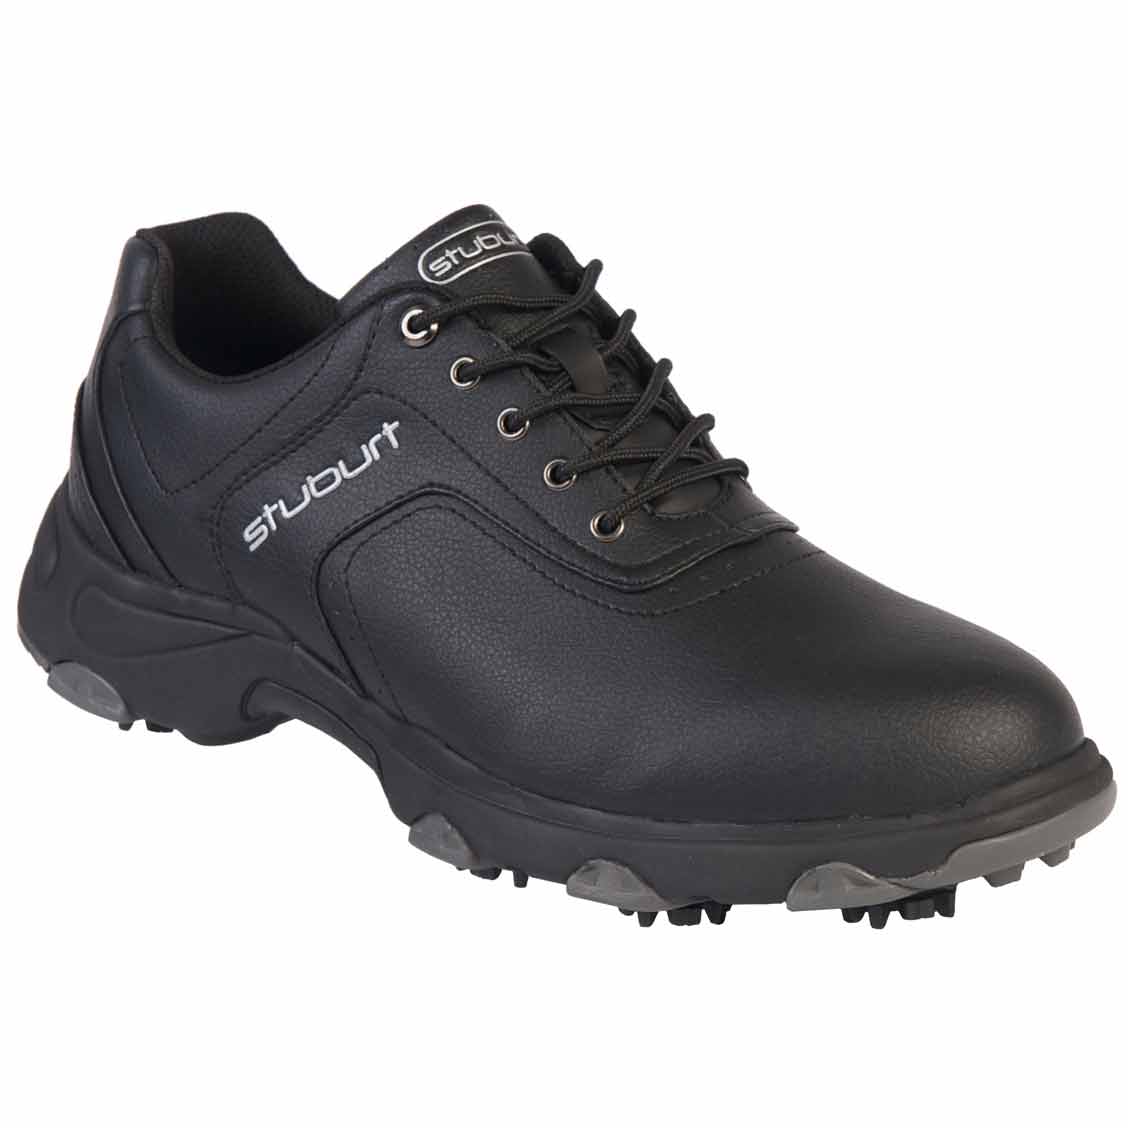 Stuburt Comfort XP Golf Shoes Mens - Black - 2011